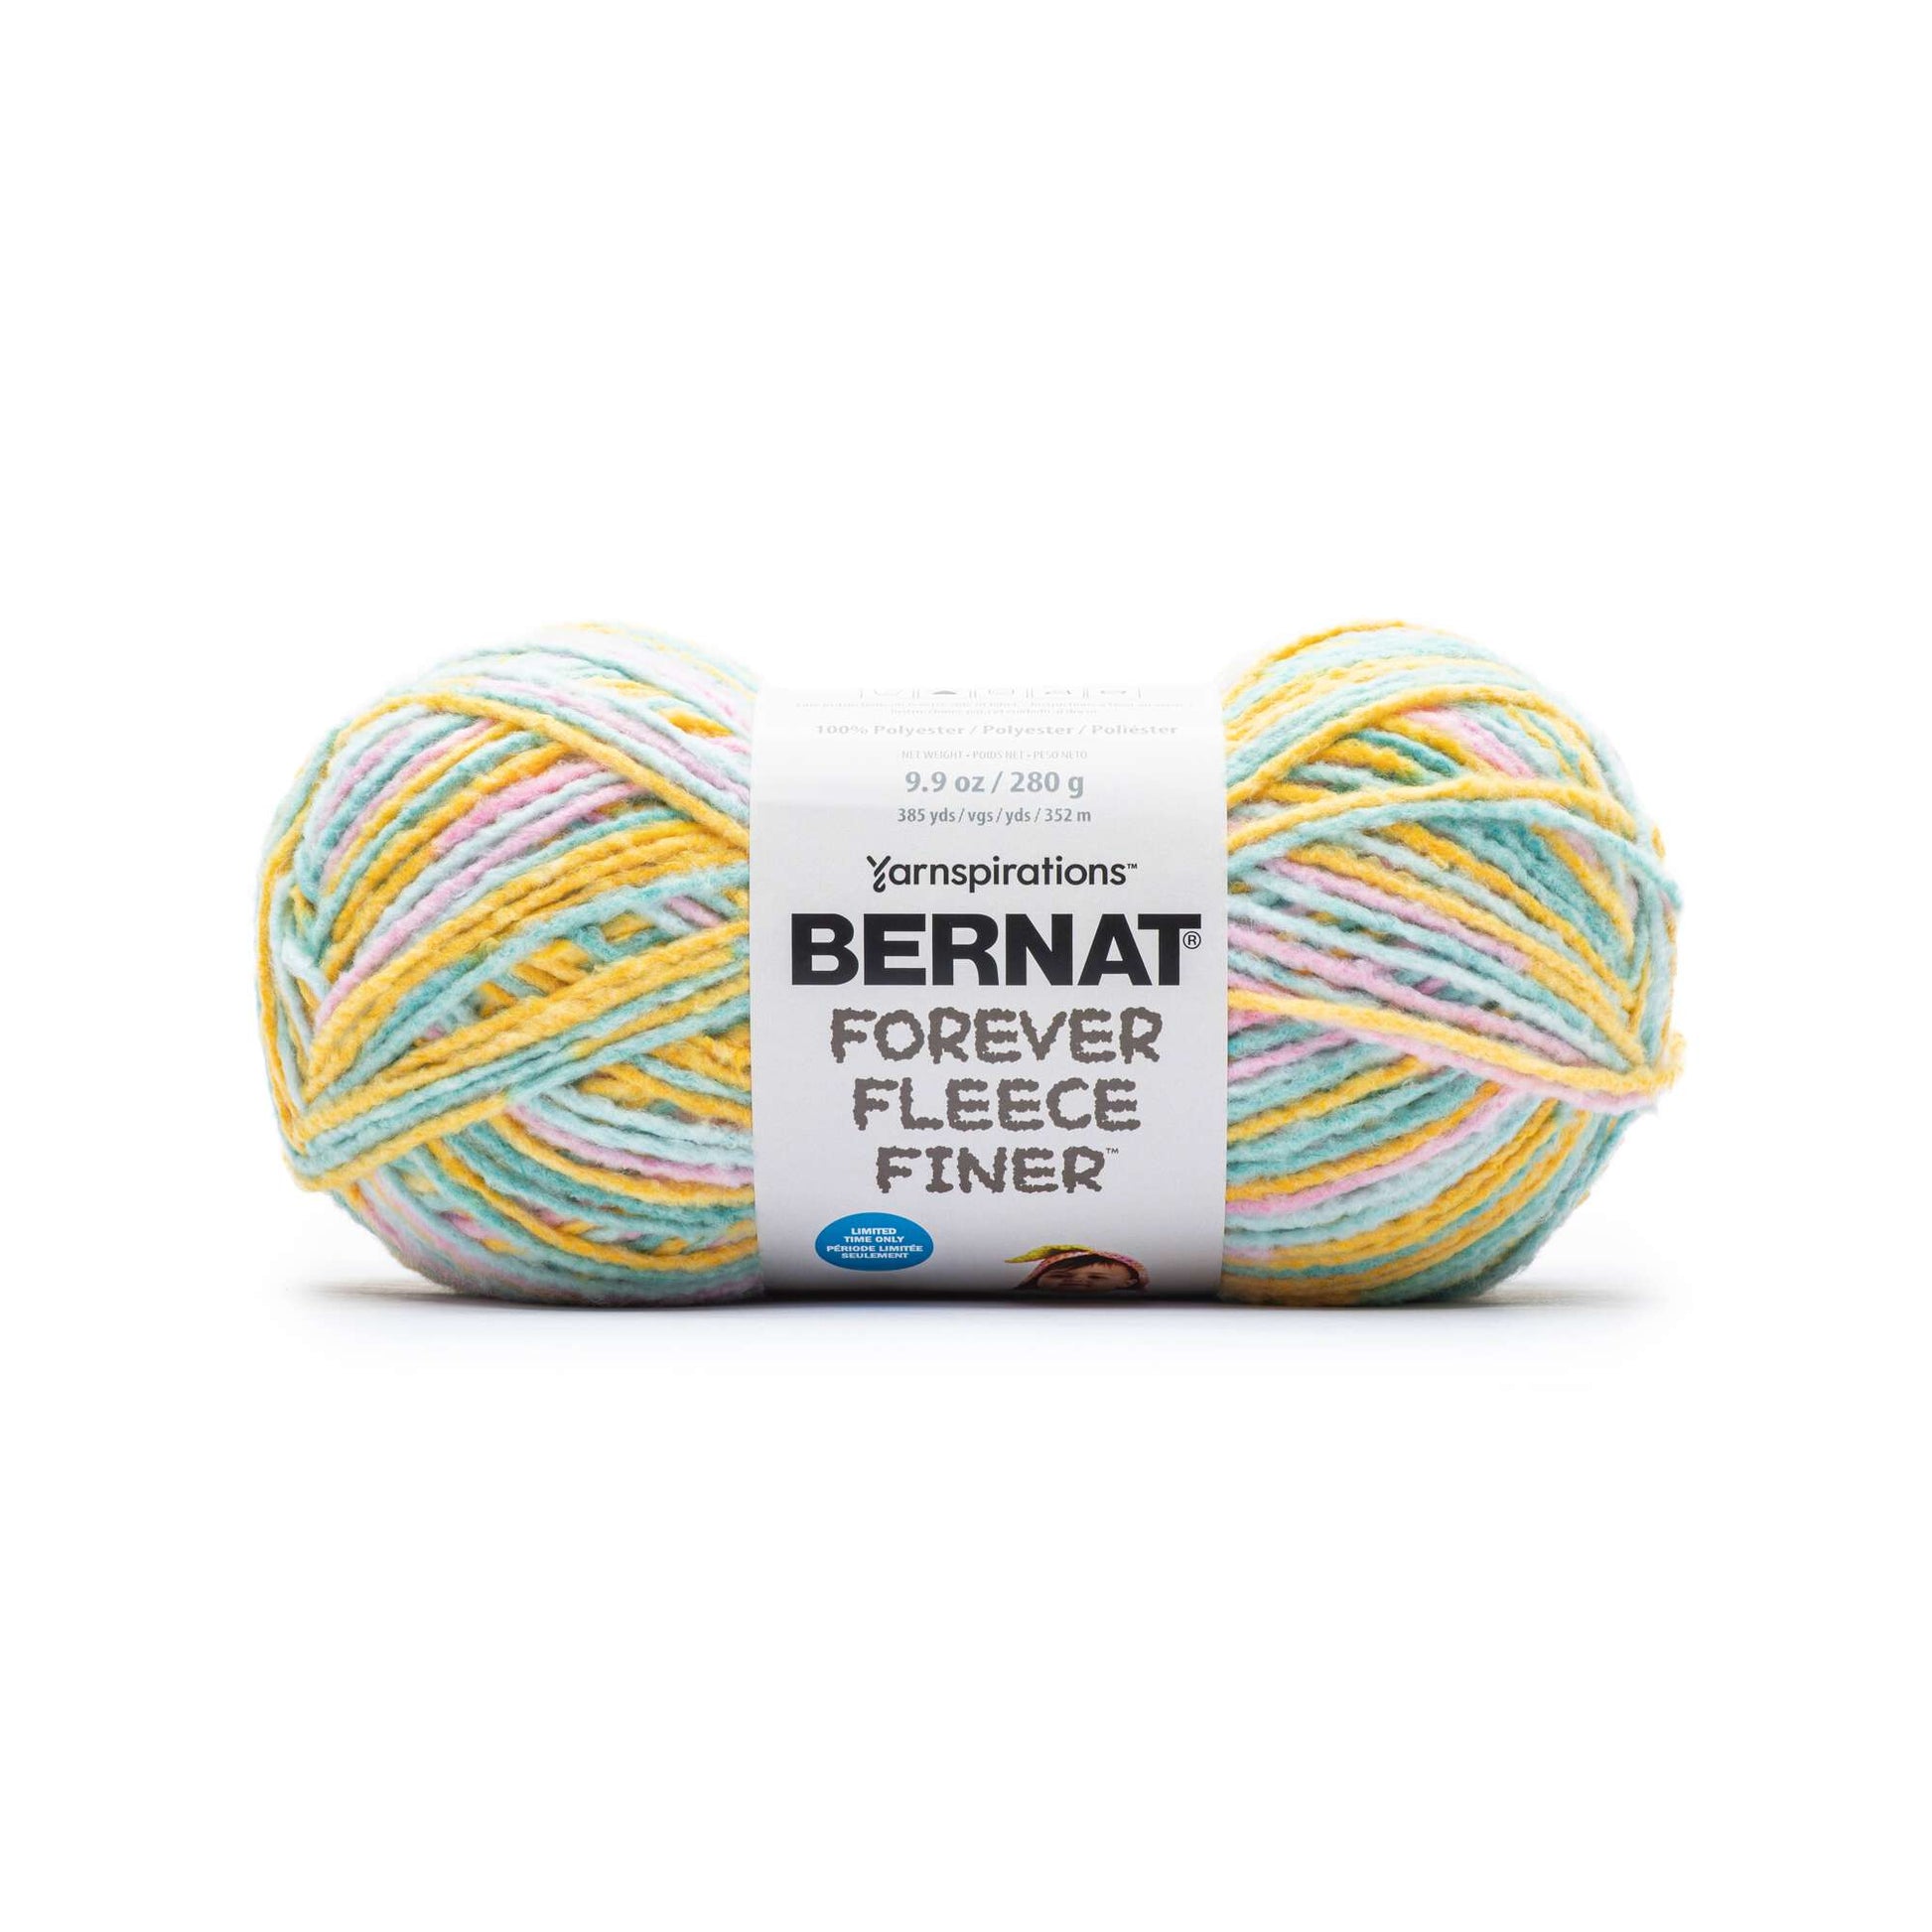 Bernat Forever Fleece Finer Yarn - Discontinued Shades Unicorn